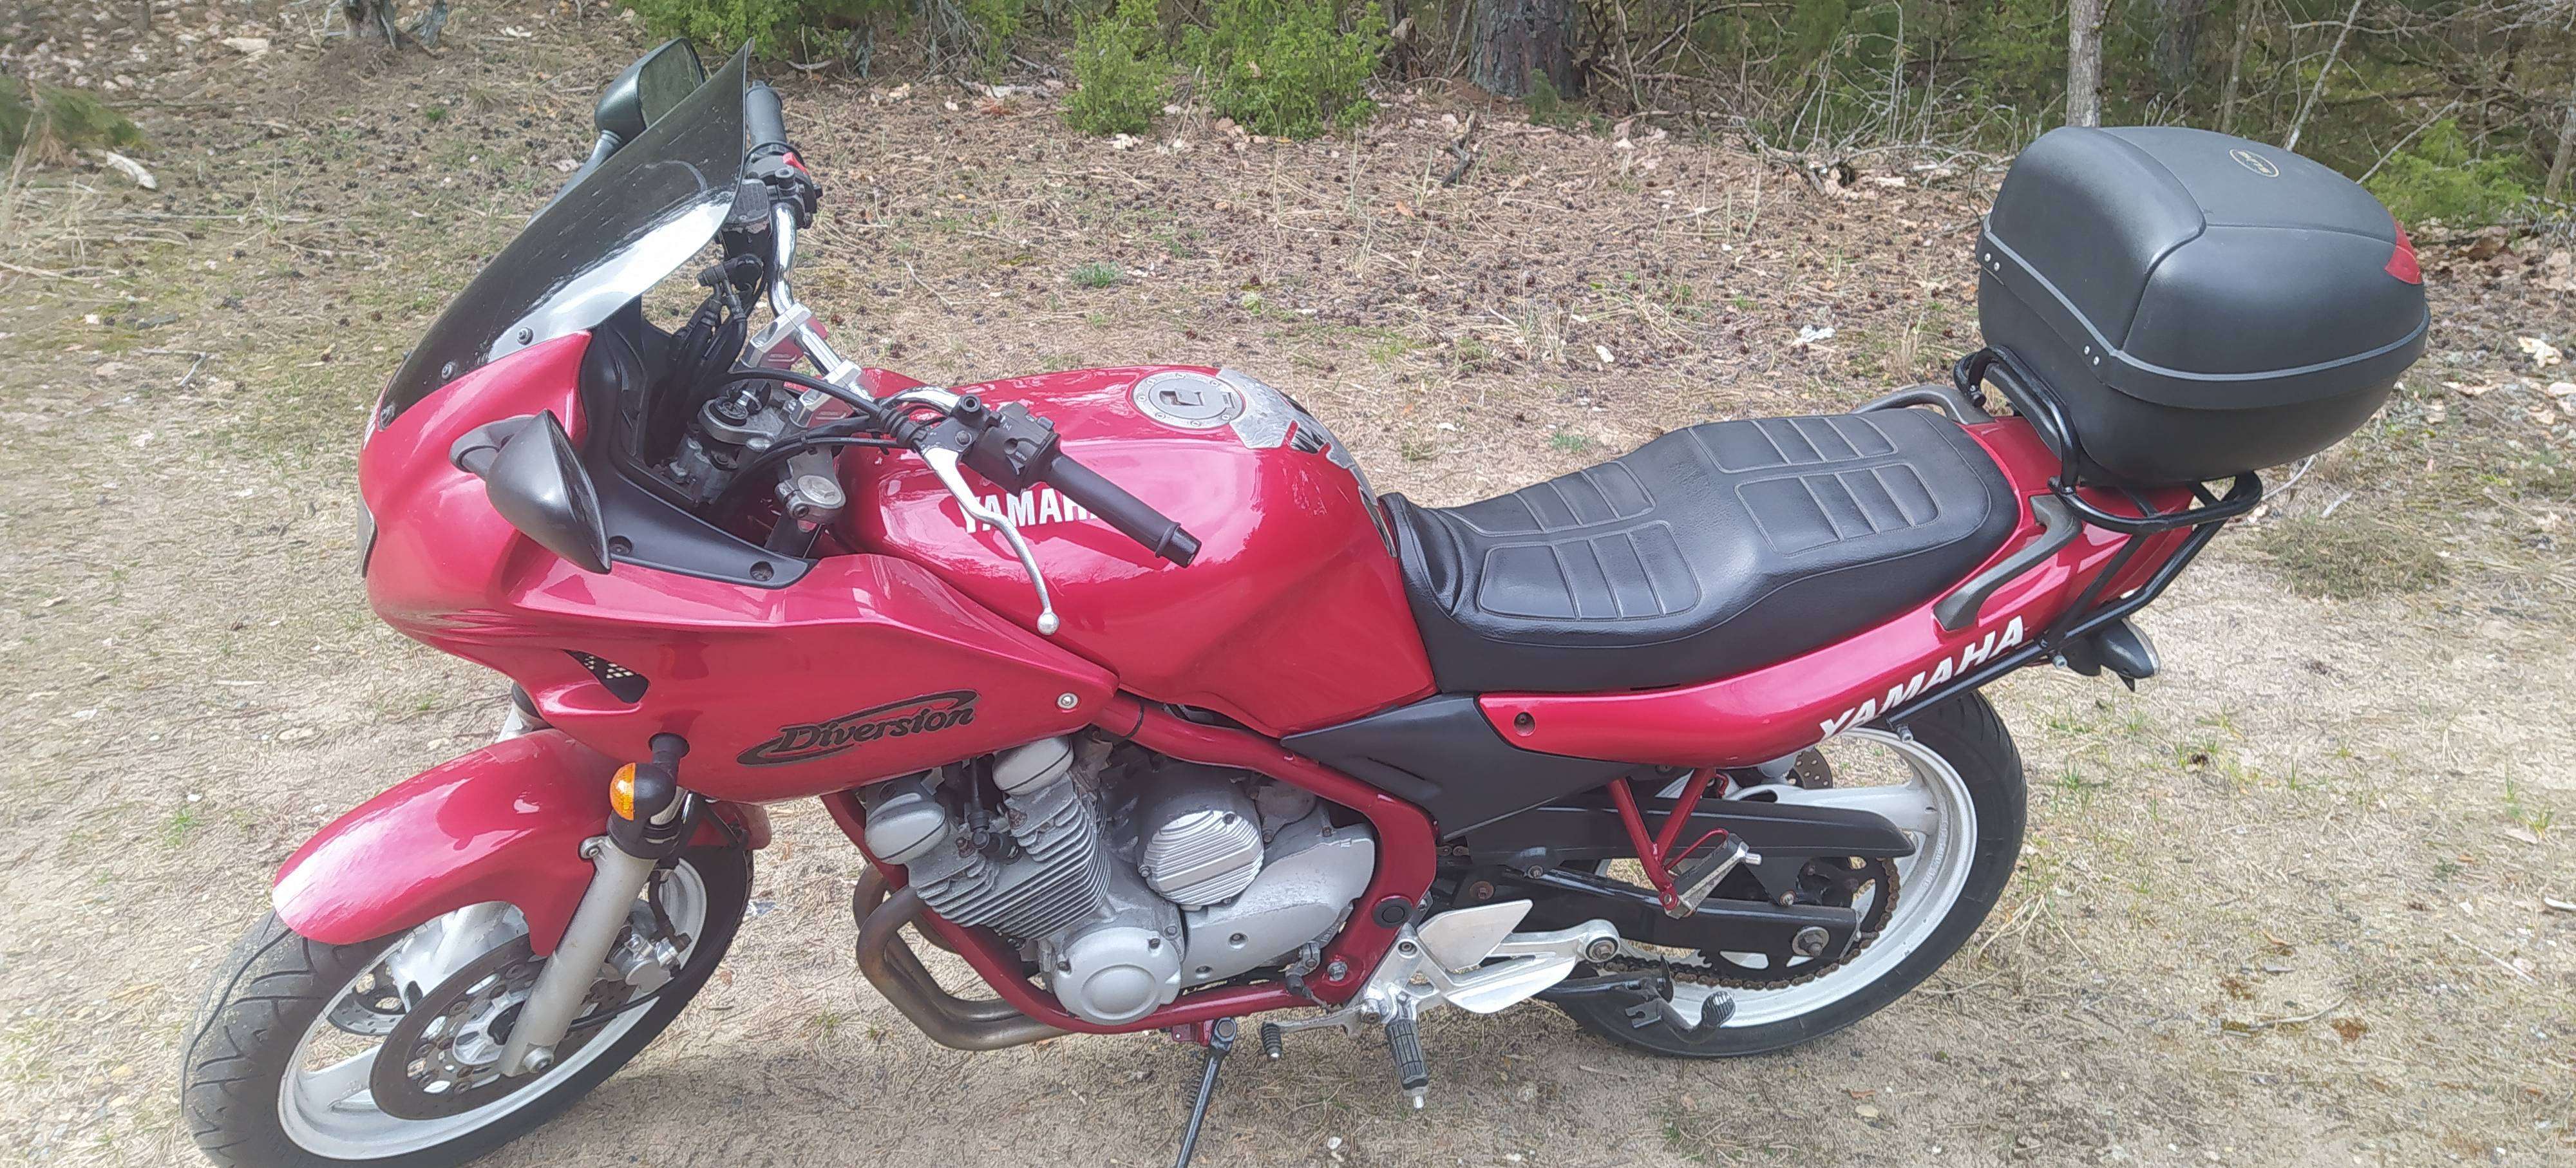 Купить мотоцикл Yamaha XJ в Беларуси в кредит - цены, характеристики, фото. в Беларуси в кредит